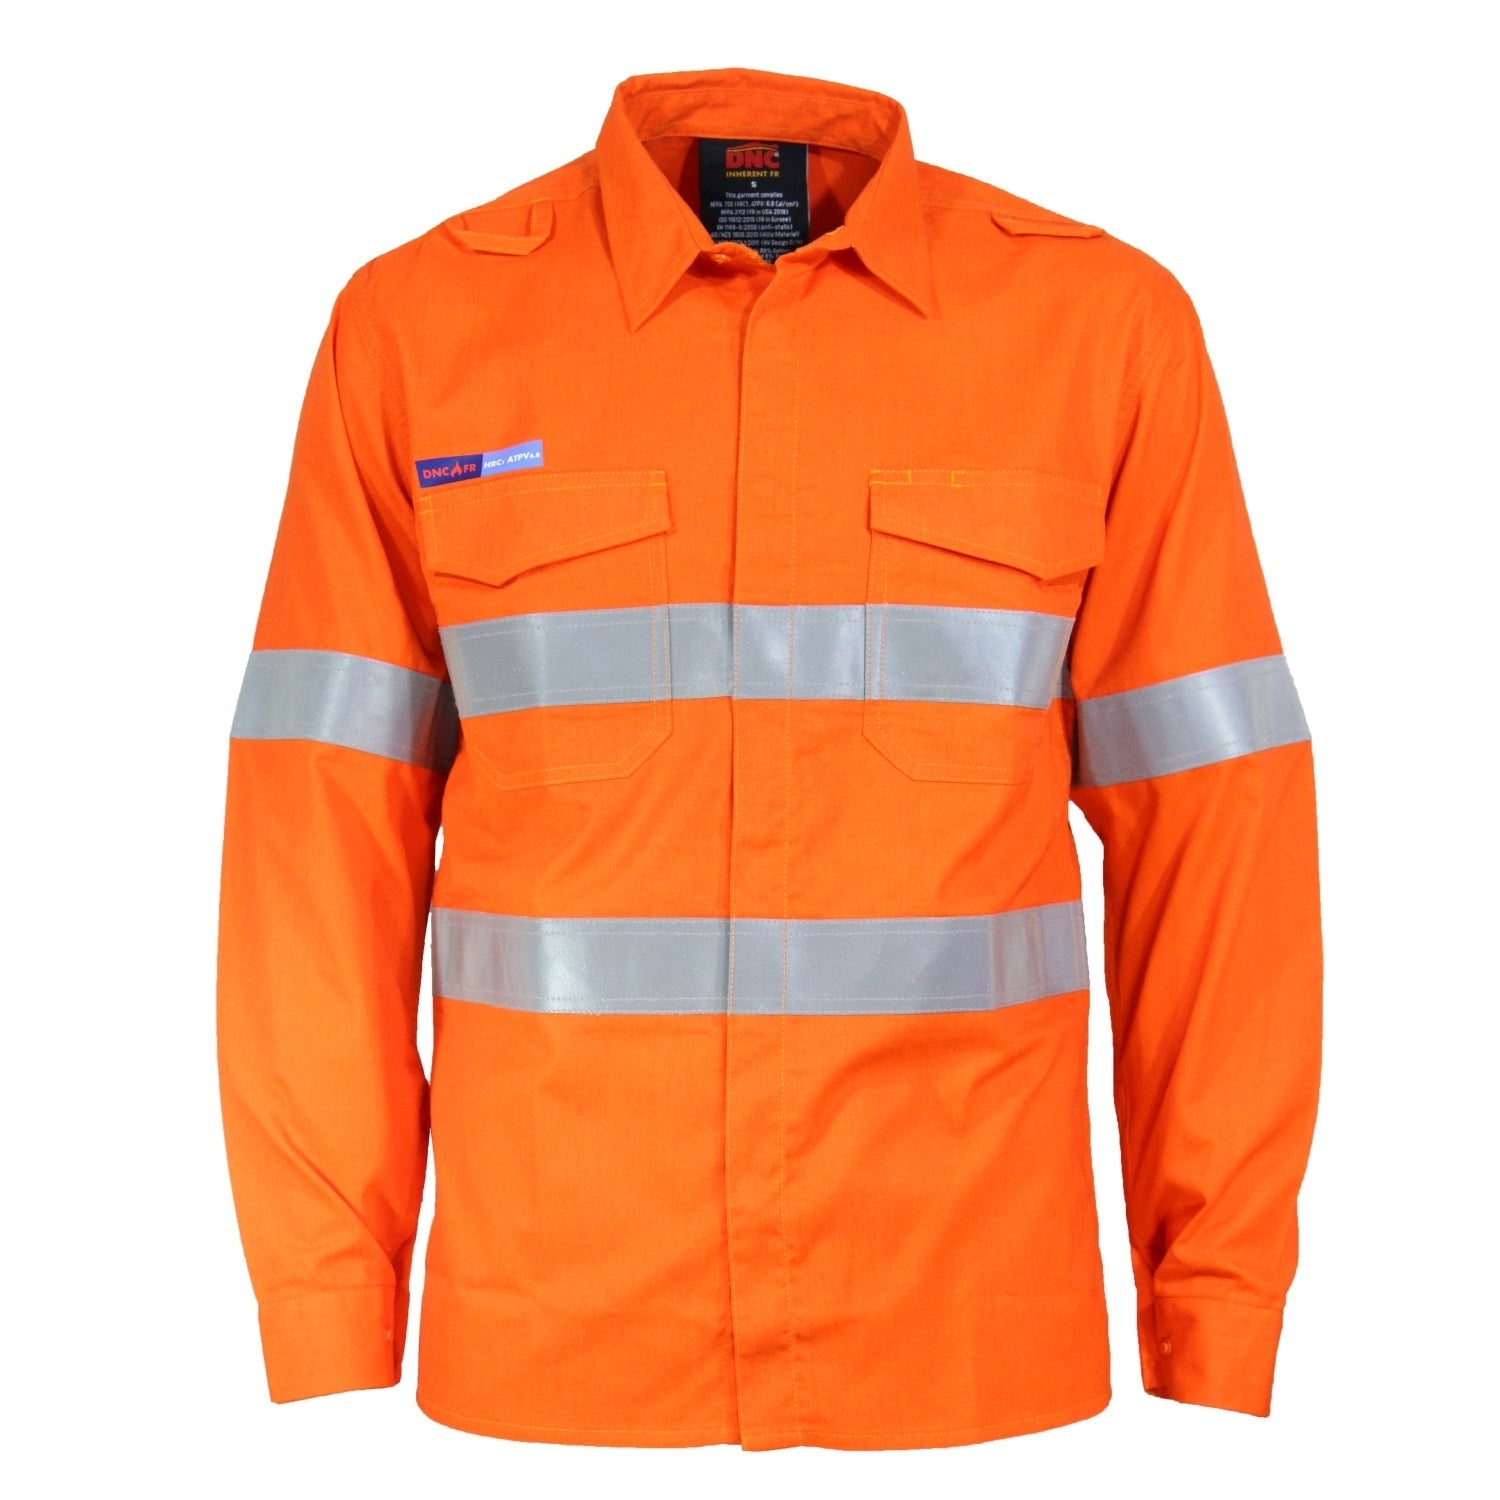 Flamearc HRC1 Day Night FR Shirt 3446 Work Wear DNC Workwear Orange XS 